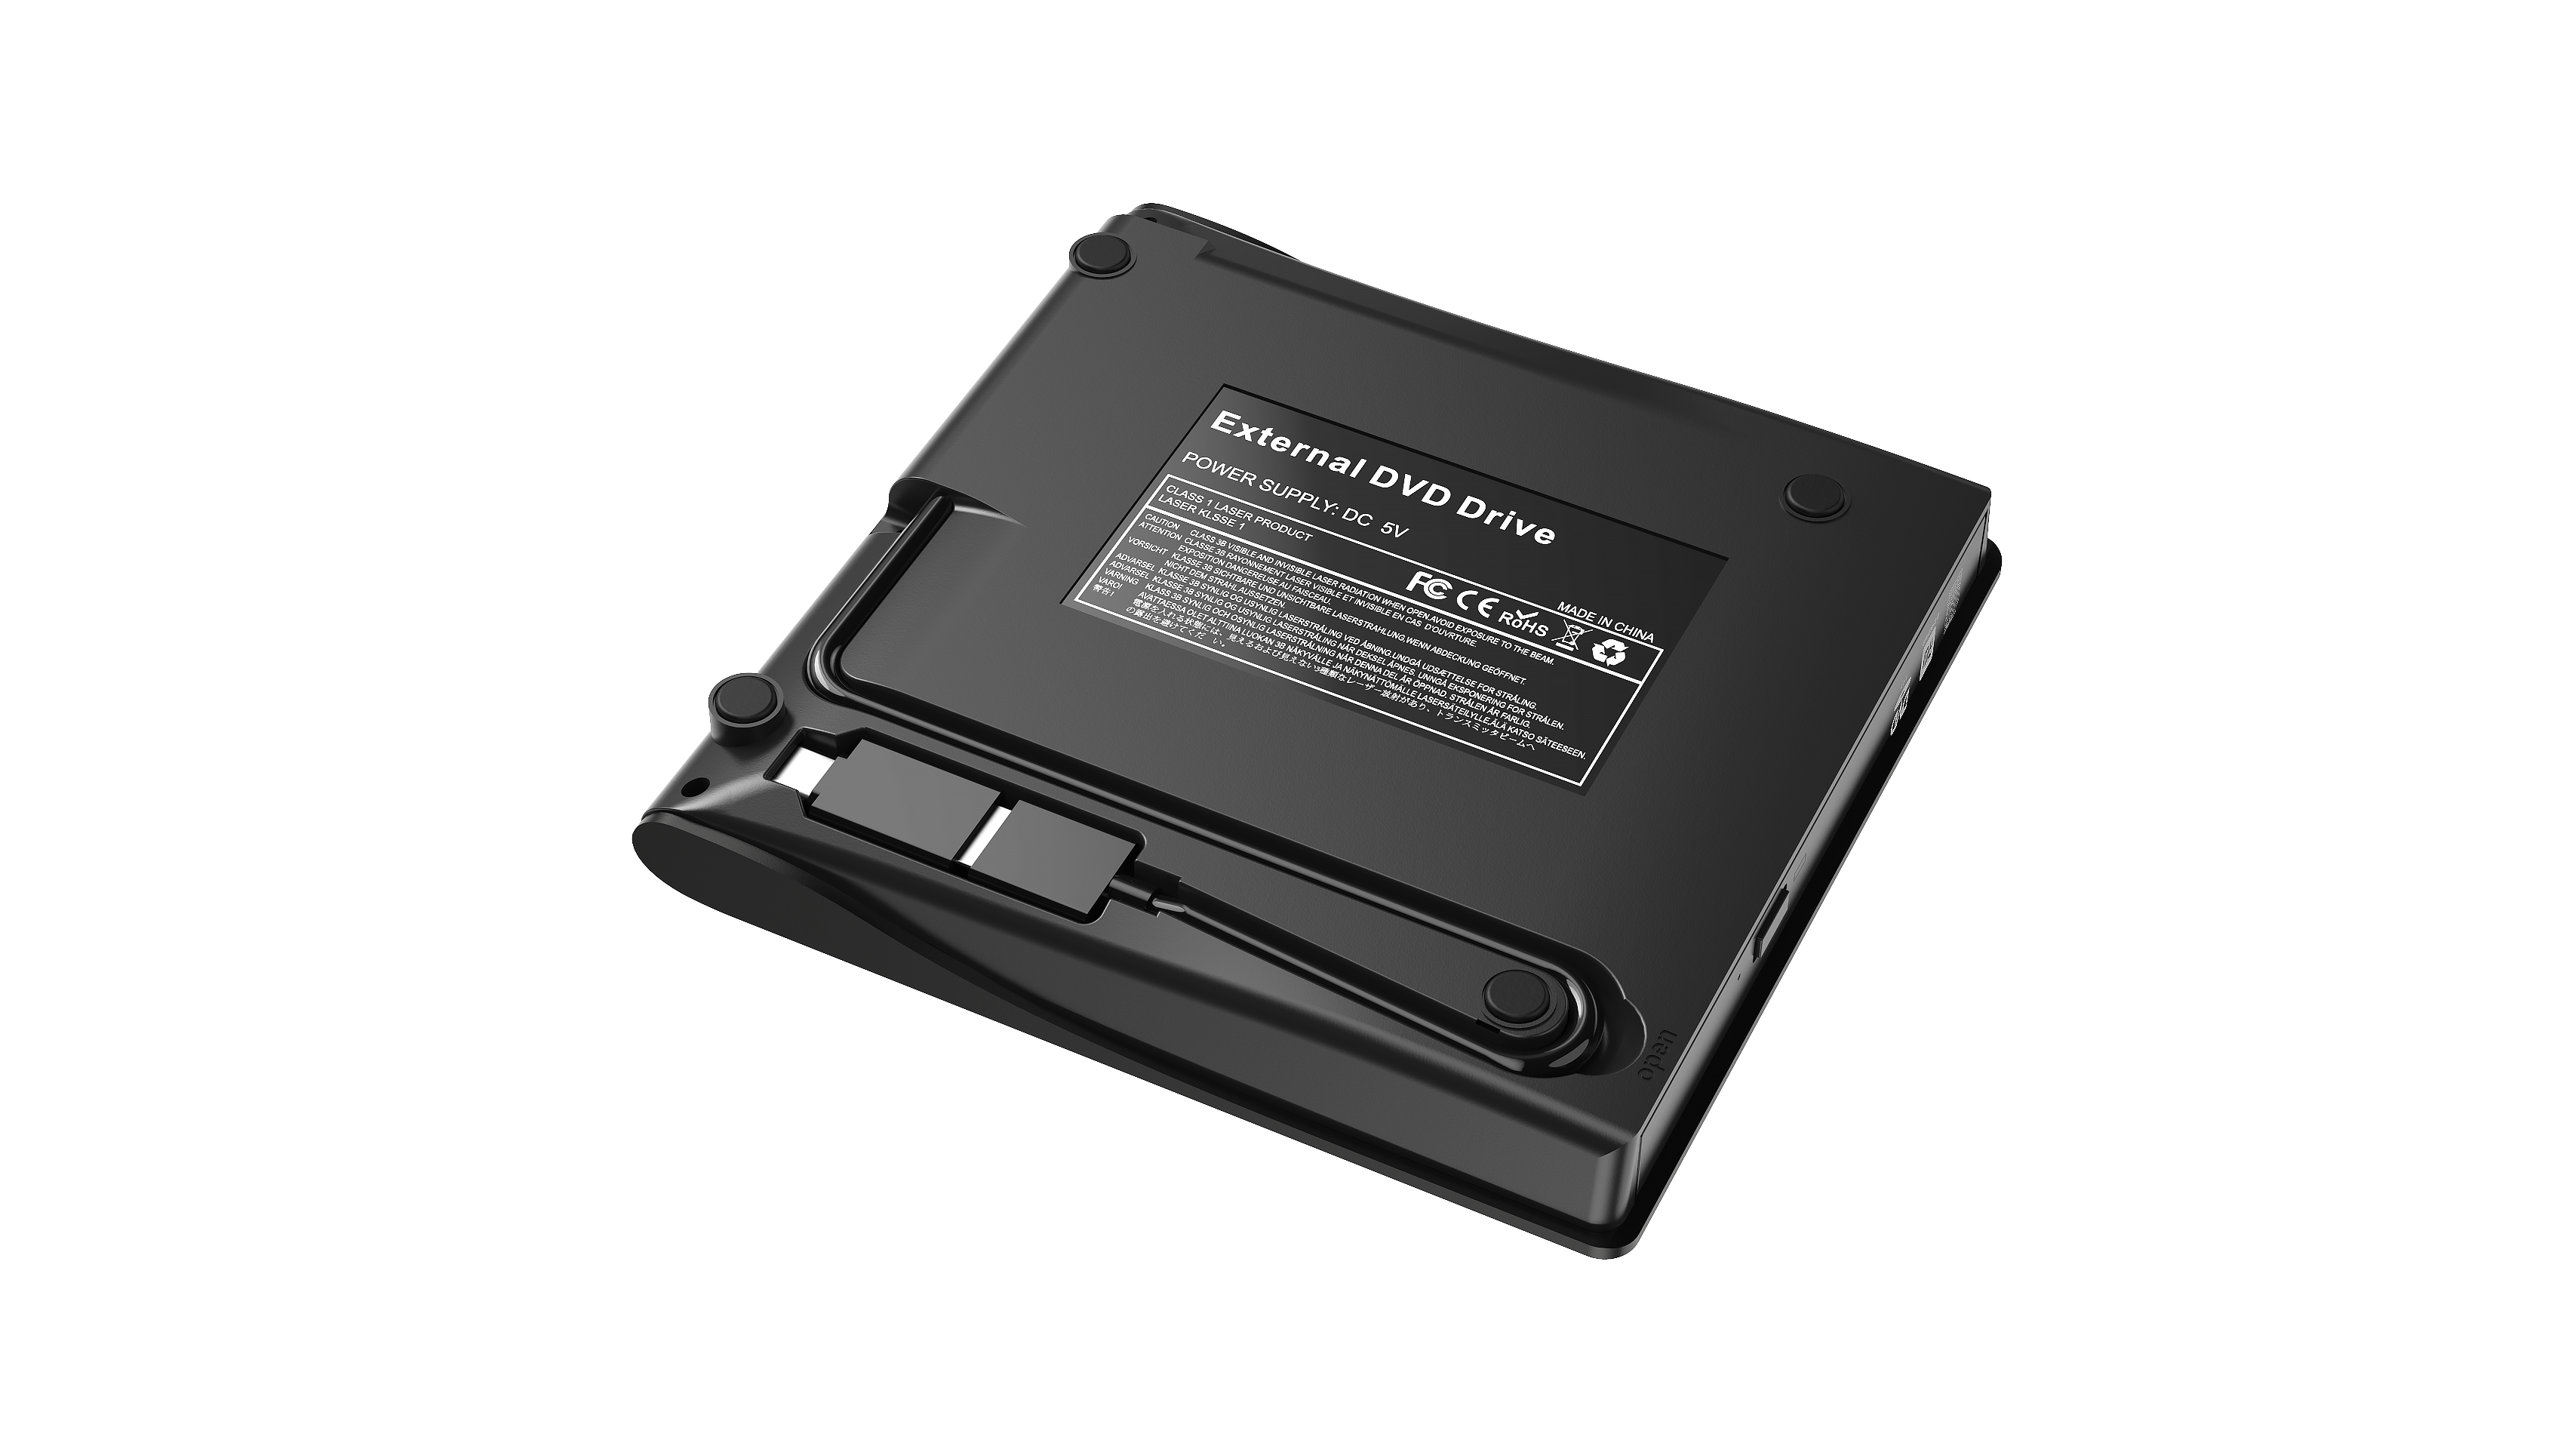 Tpye-C-USB-30-External-Optical-Drive-DVD-Player-Burner-for-PCNotebook-In-HomeOutdoorWork-1750092